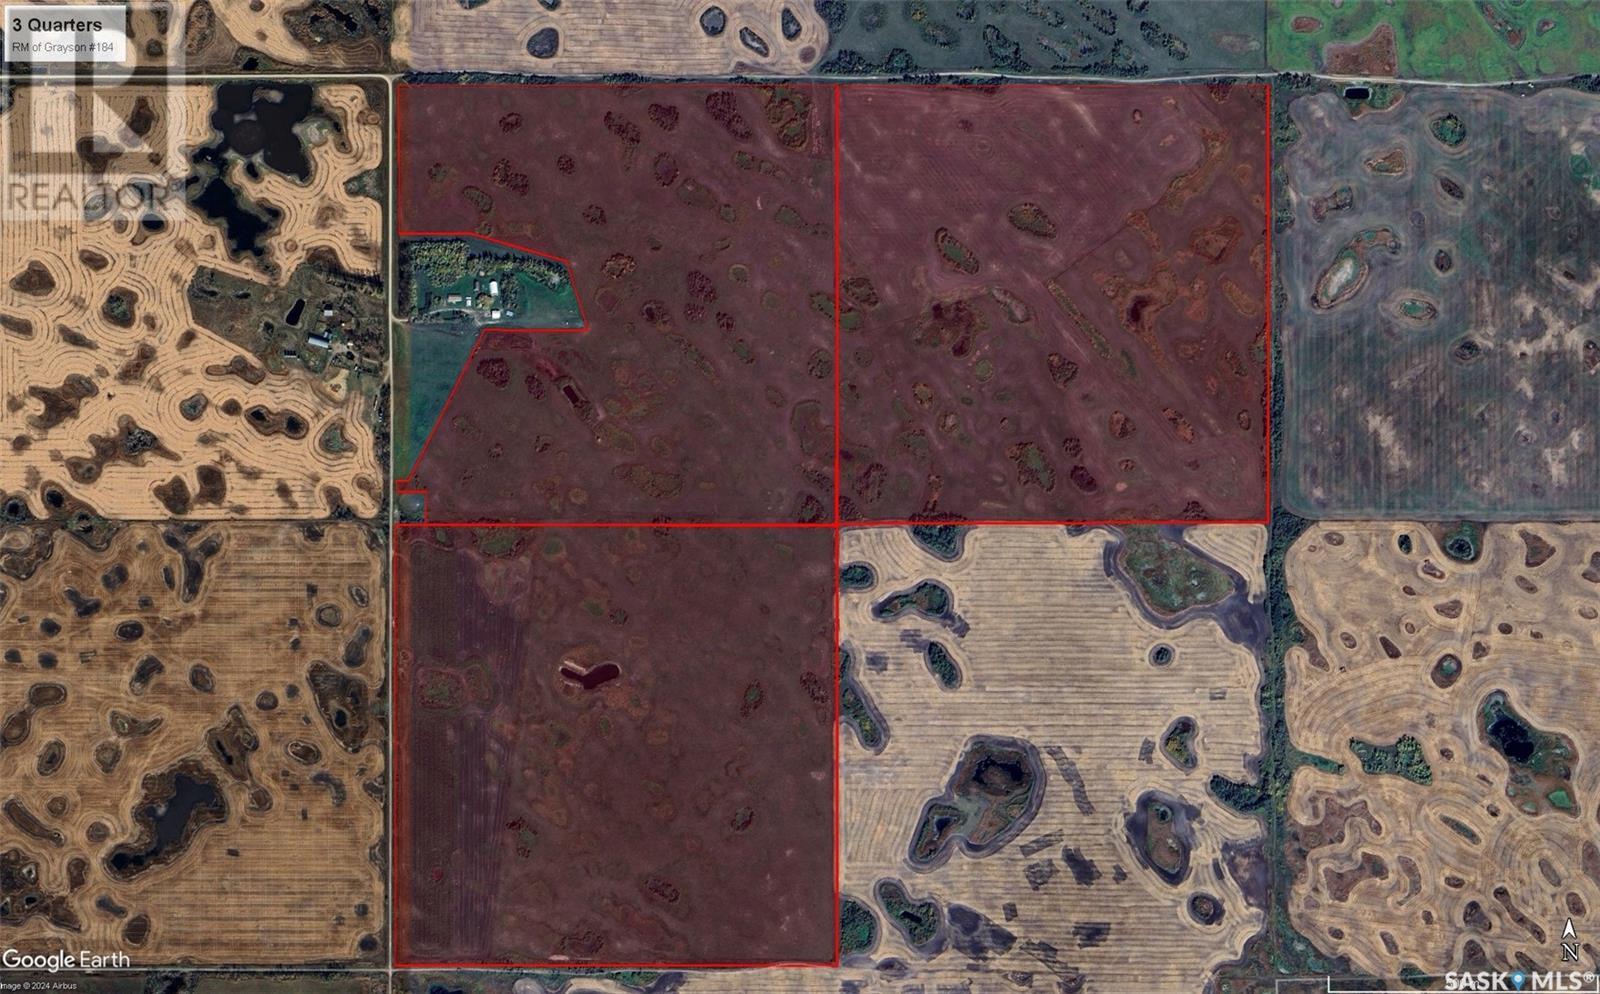 3 Quarters Grainland Near Melville (Prinsloo), grayson rm no. 184, Saskatchewan